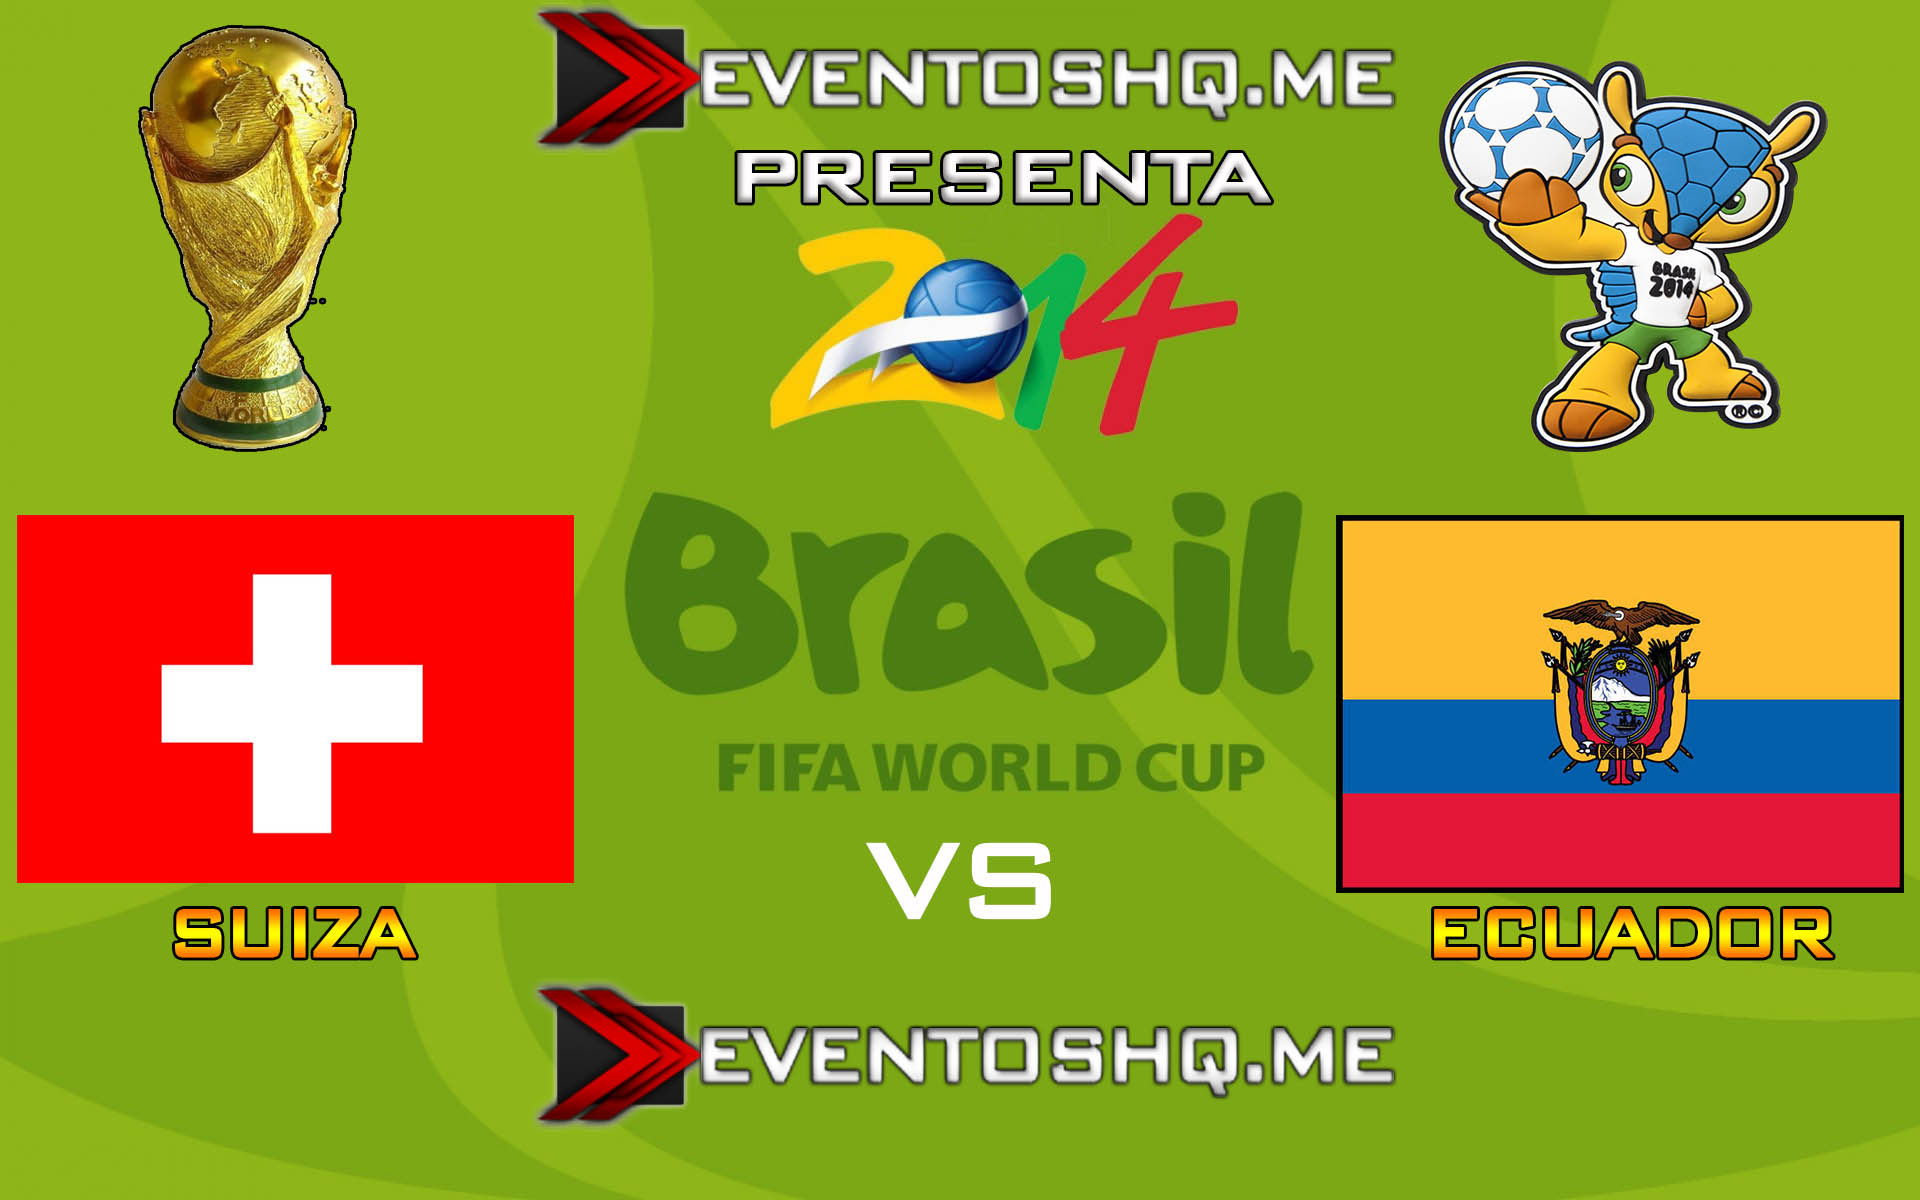 Ver en Vivo Suiza vs Ecuador Mundial Brasil 2014 www.eventoshq.me